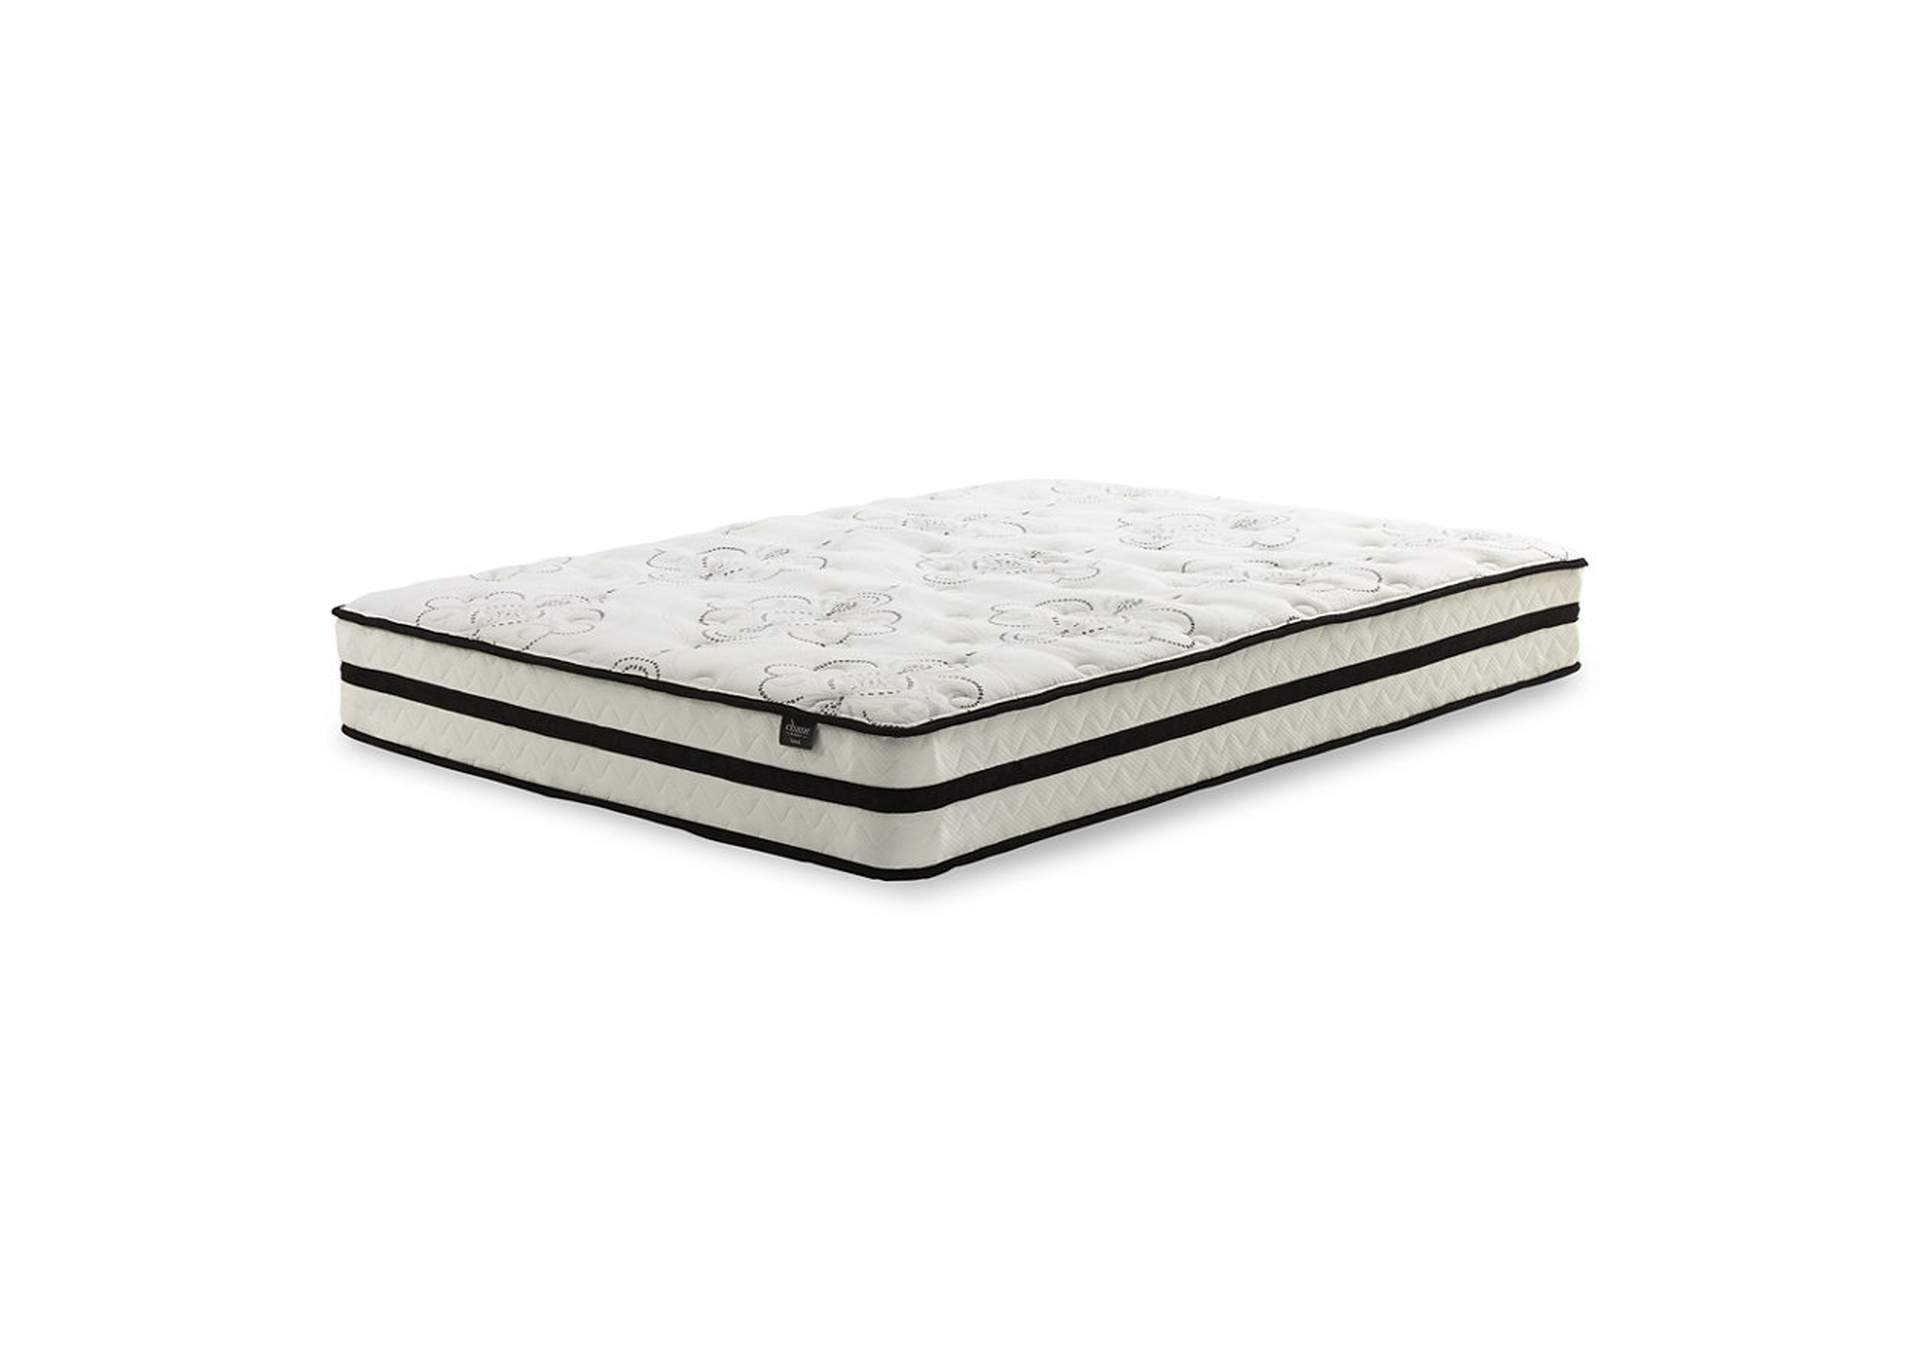 chime 10 inch hybrid mattress review